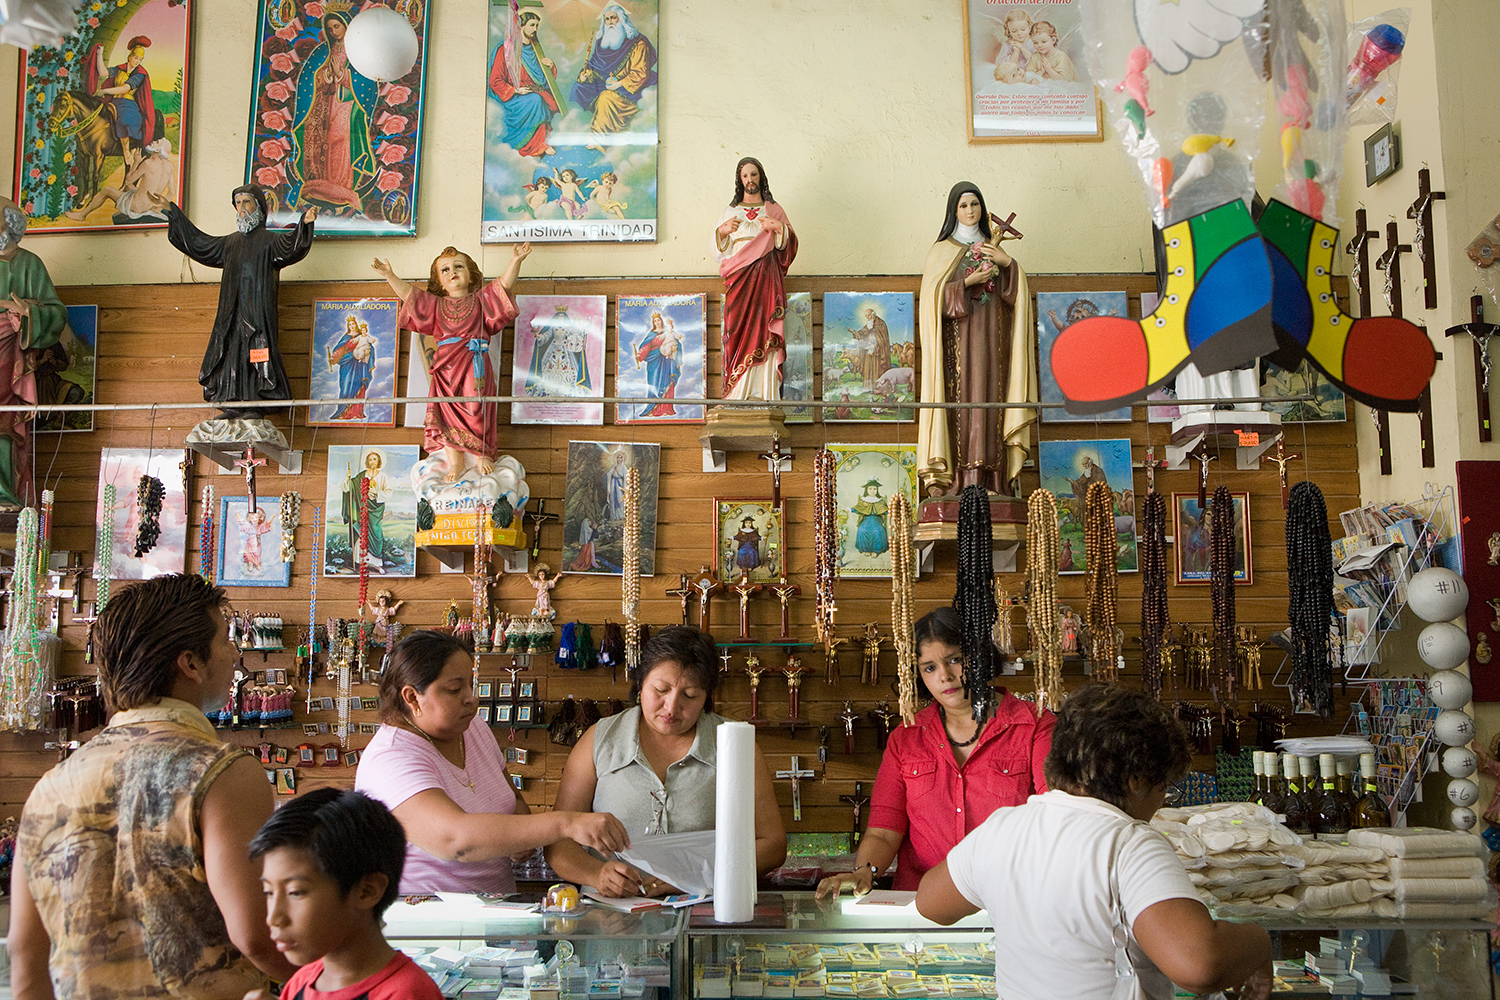  A Christian goods shop in Mérida.  